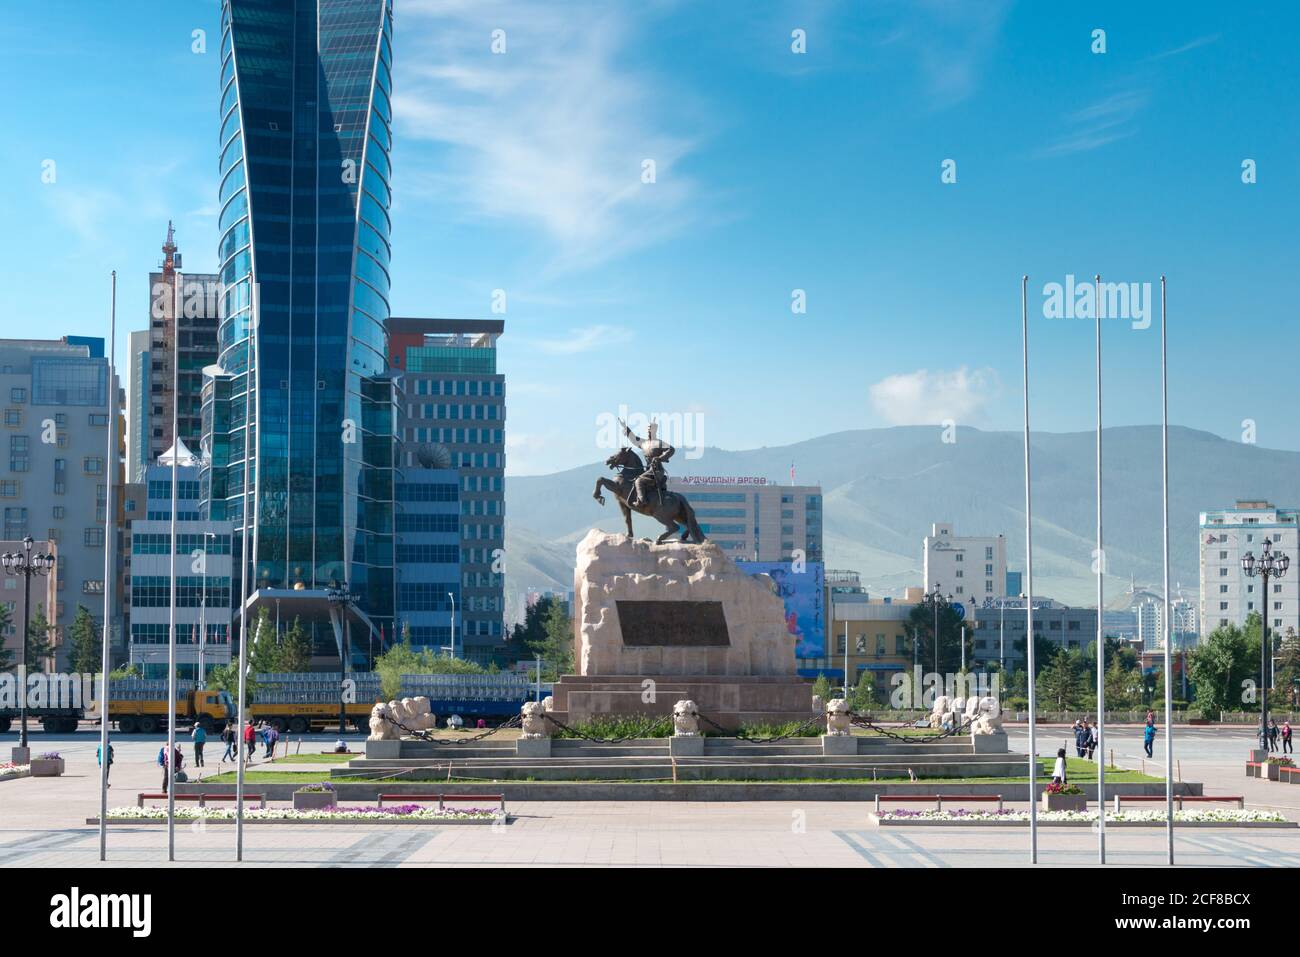 ULAANBAATAR, MONGOLIA - Sukhbaatar Square (Chinggis Square). a famous Tourist spot in Ulaanbaatar, Mongolia. Stock Photo